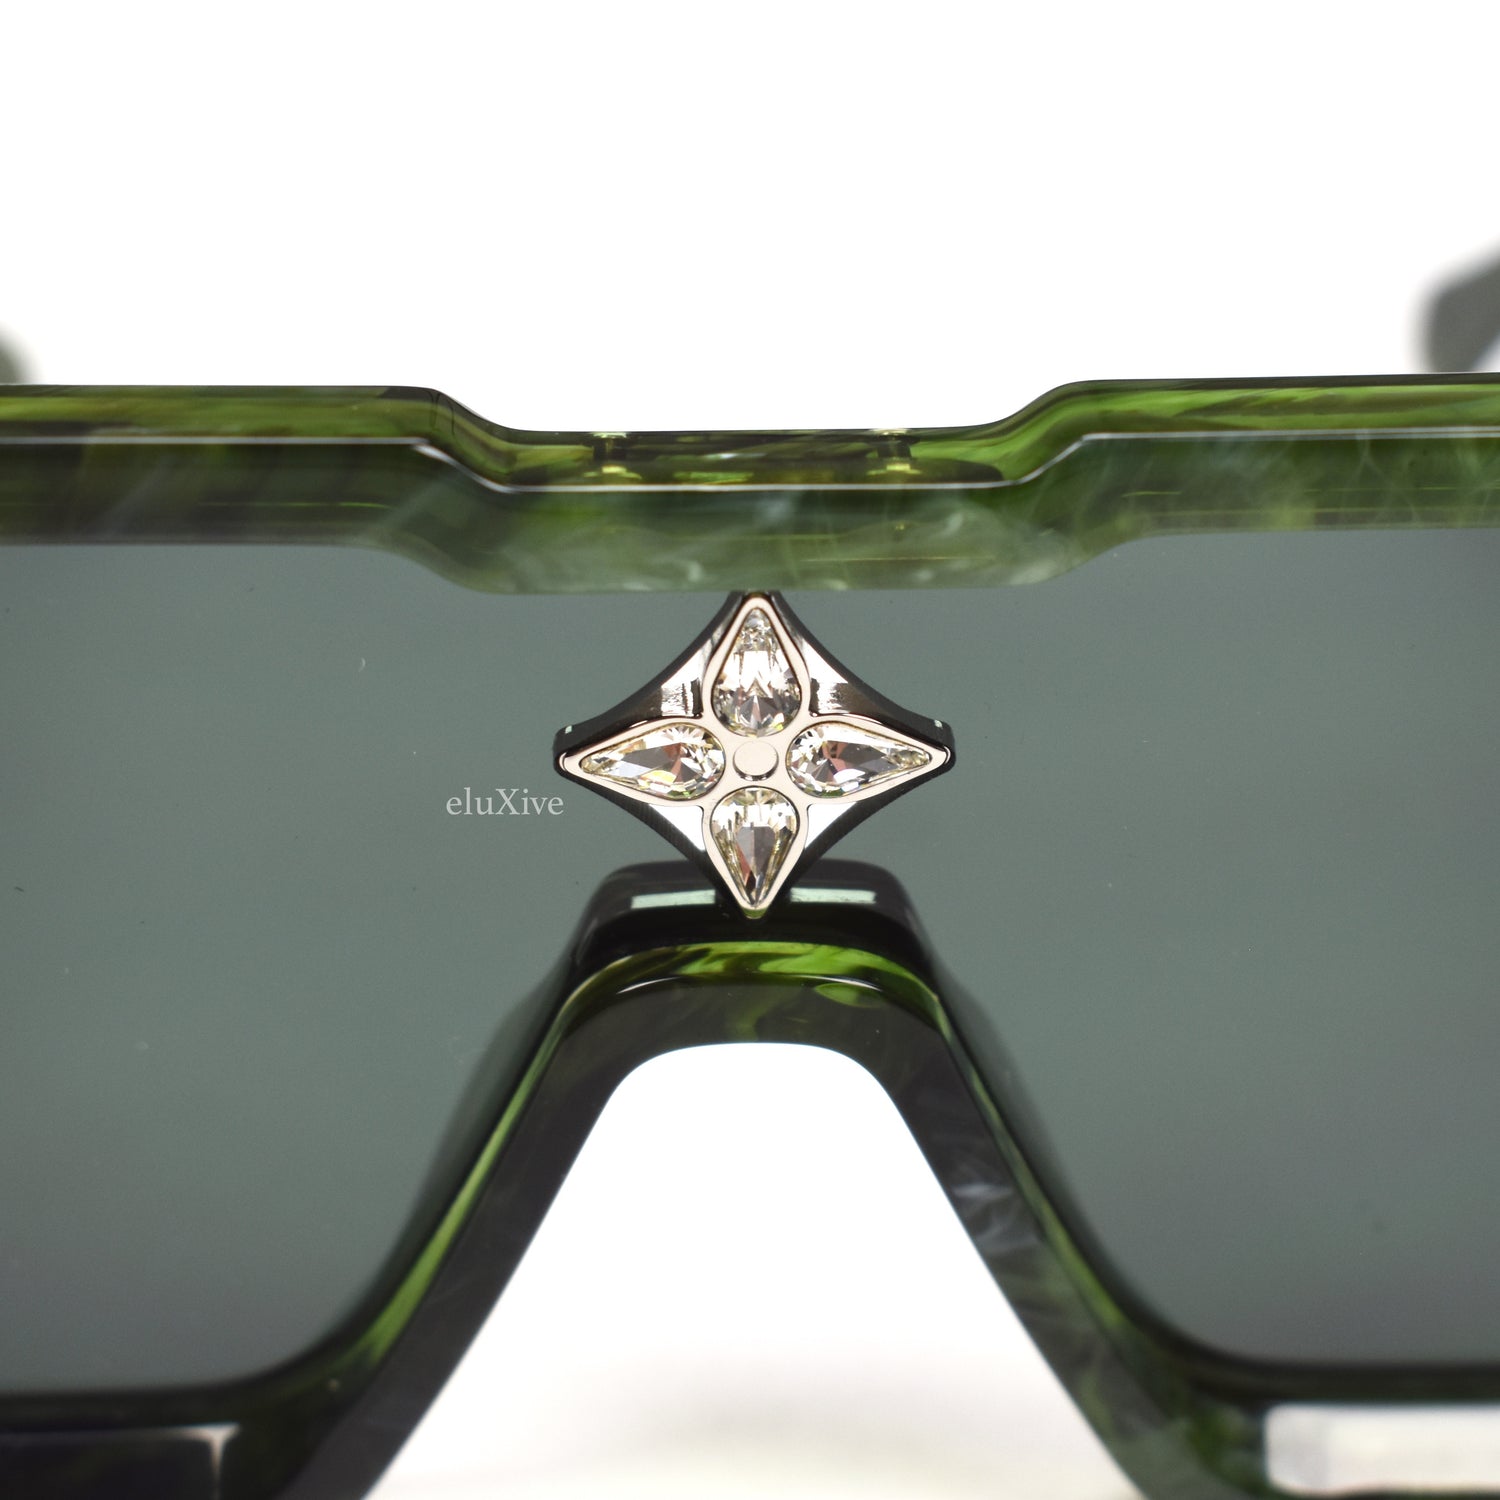 Louis Vuitton, Accessories, Louis Vuitton Sunglasses Cyclone Marble Green